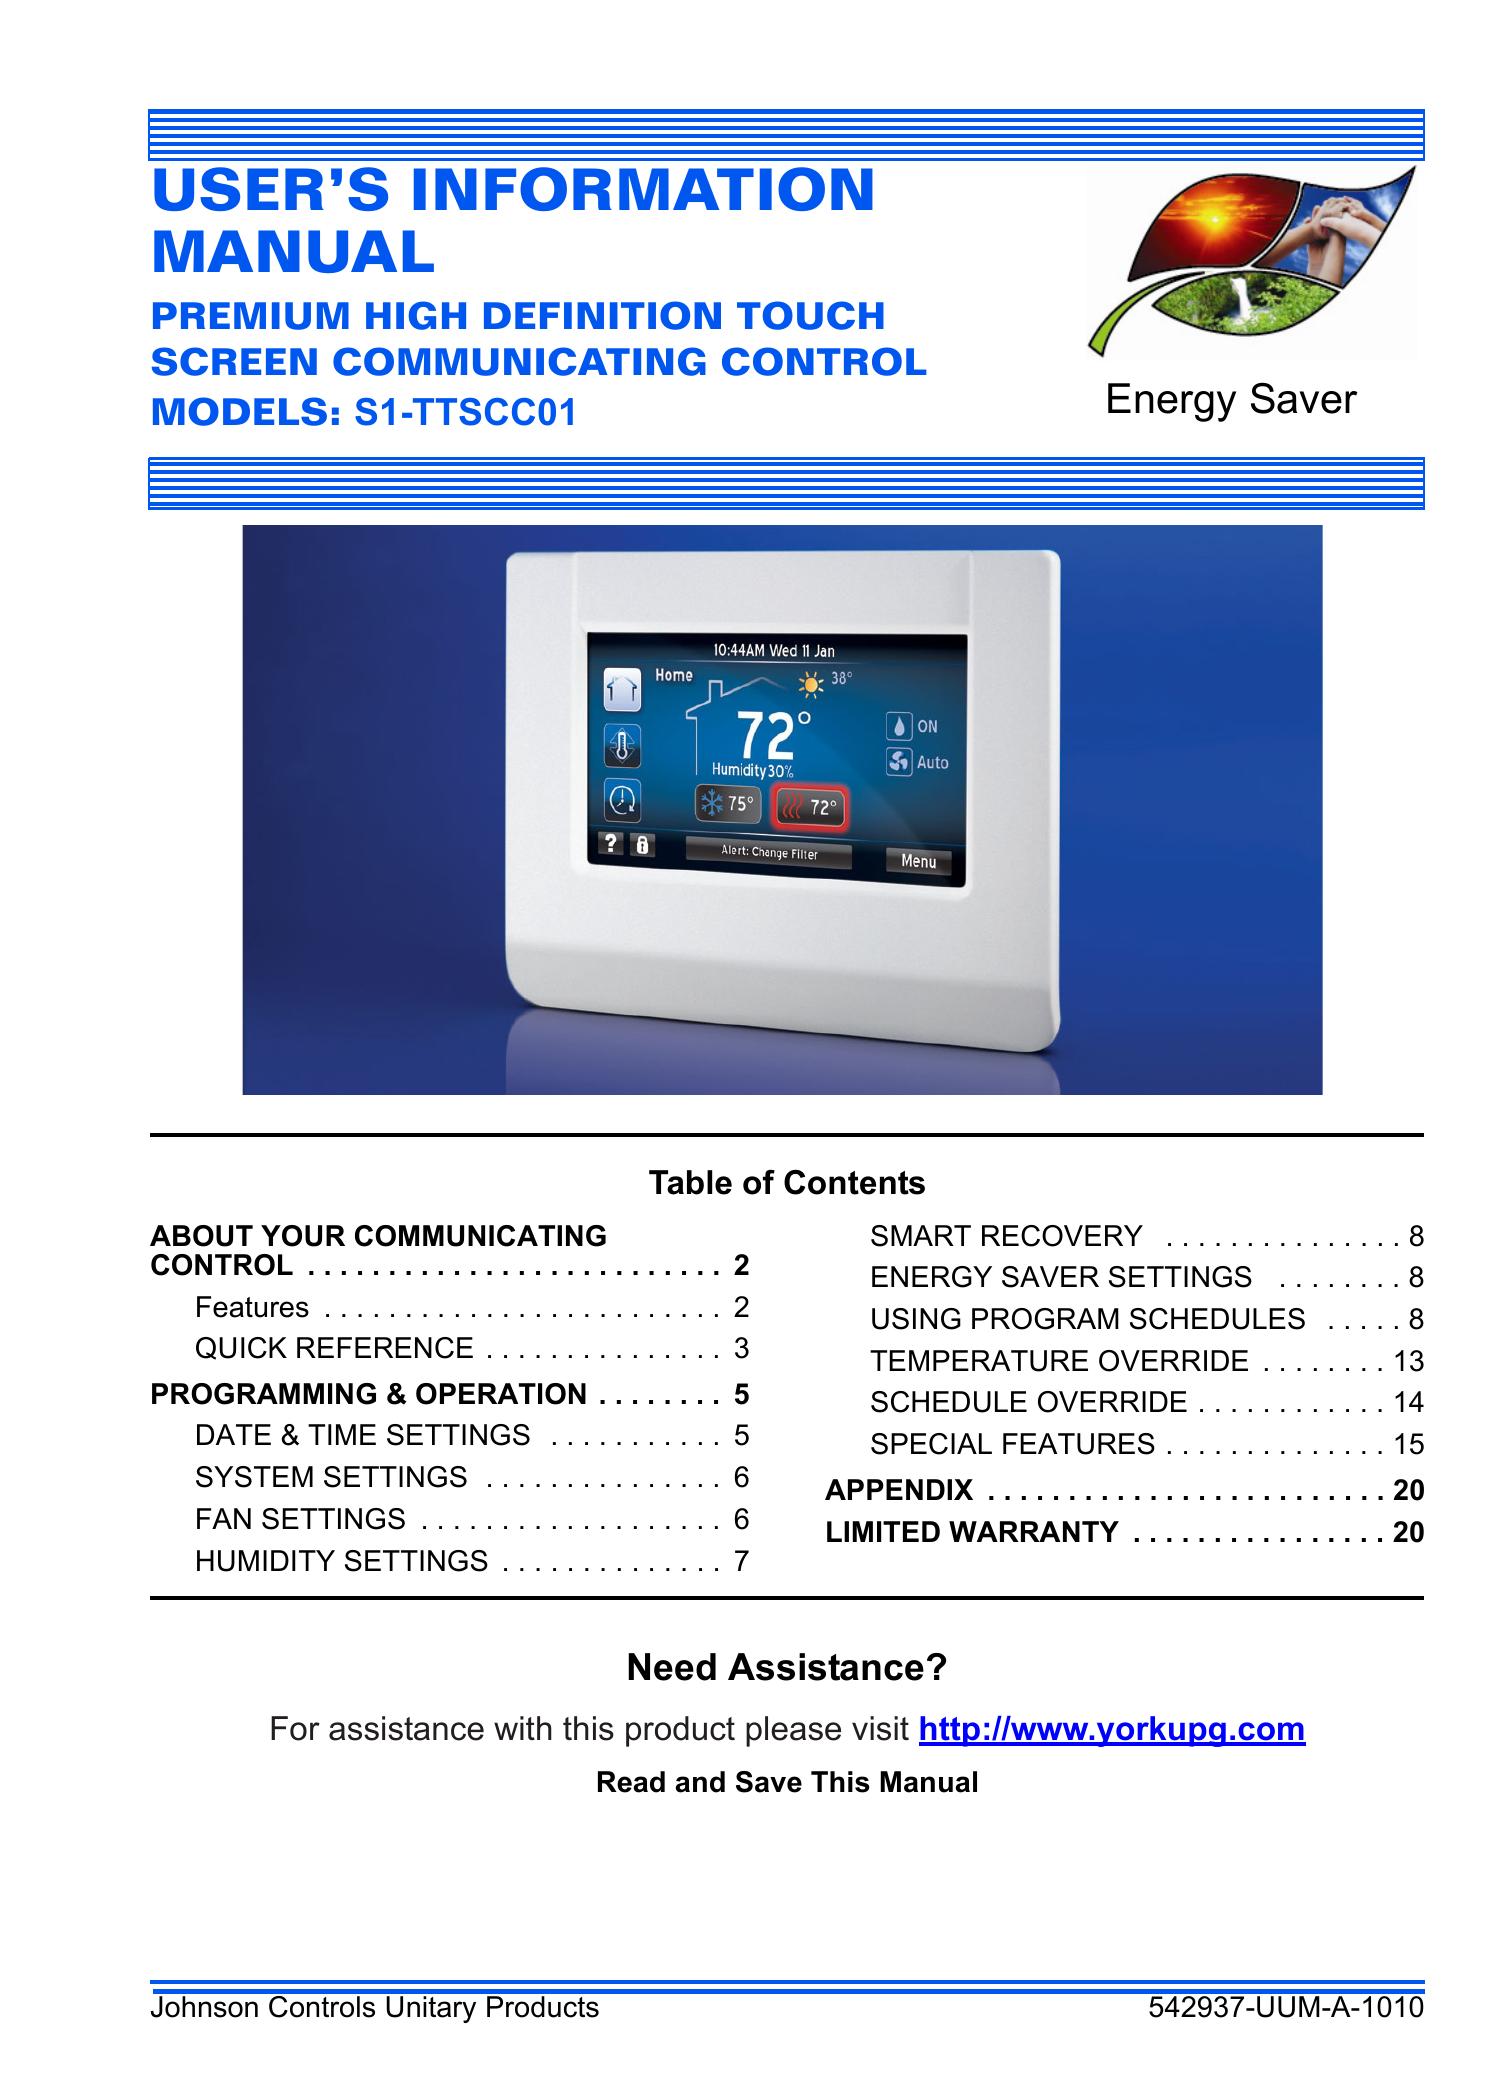 Johnson Controls S1-TTSCC01 Weather Radio User Manual